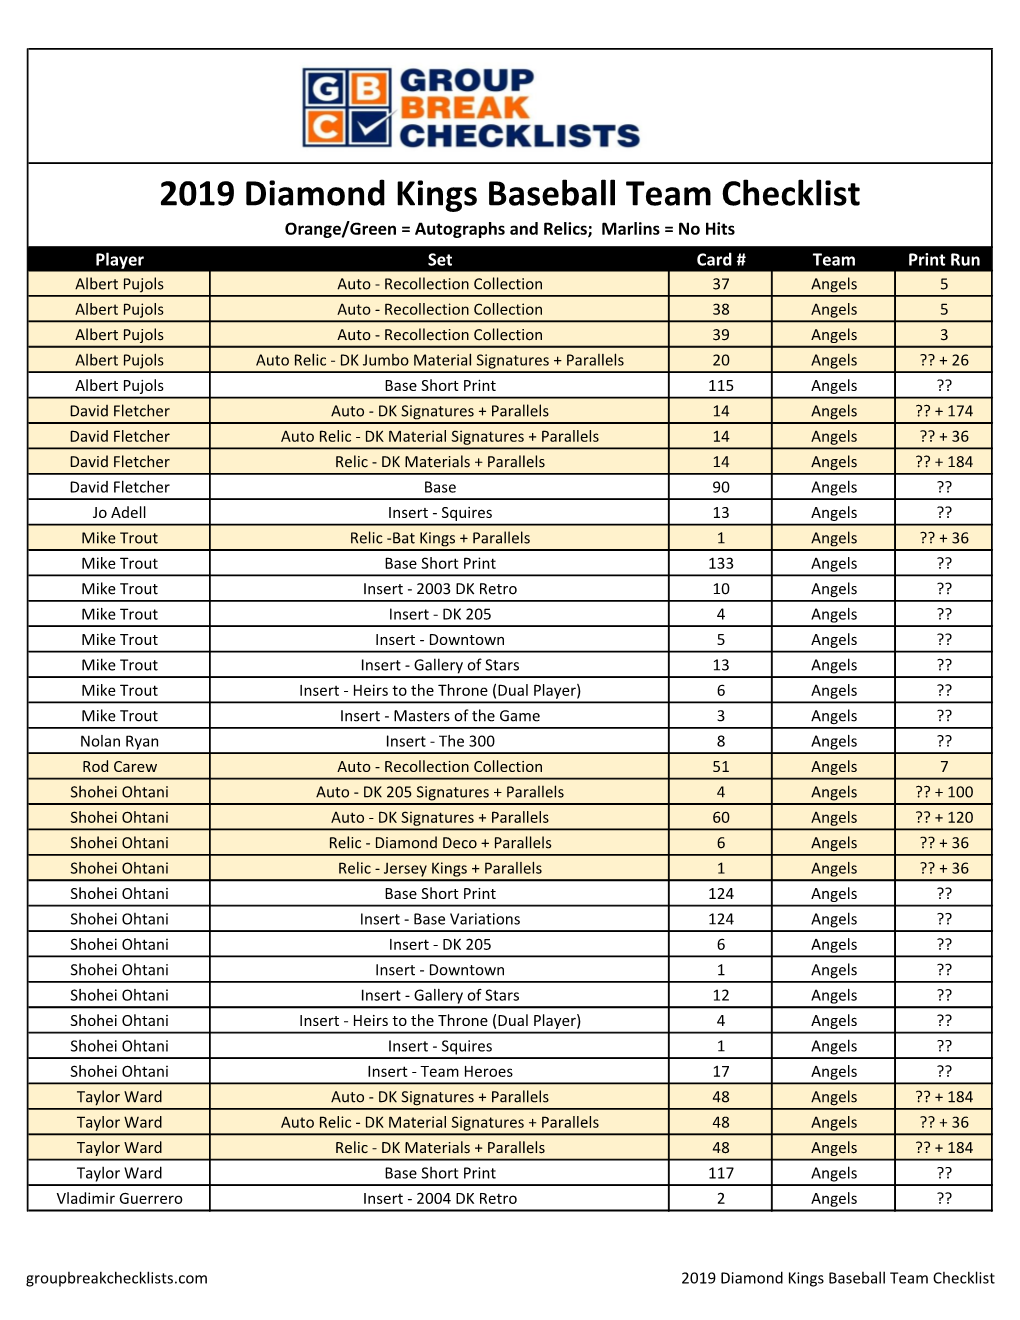 2019 Diamond Kings Baseball Checklist